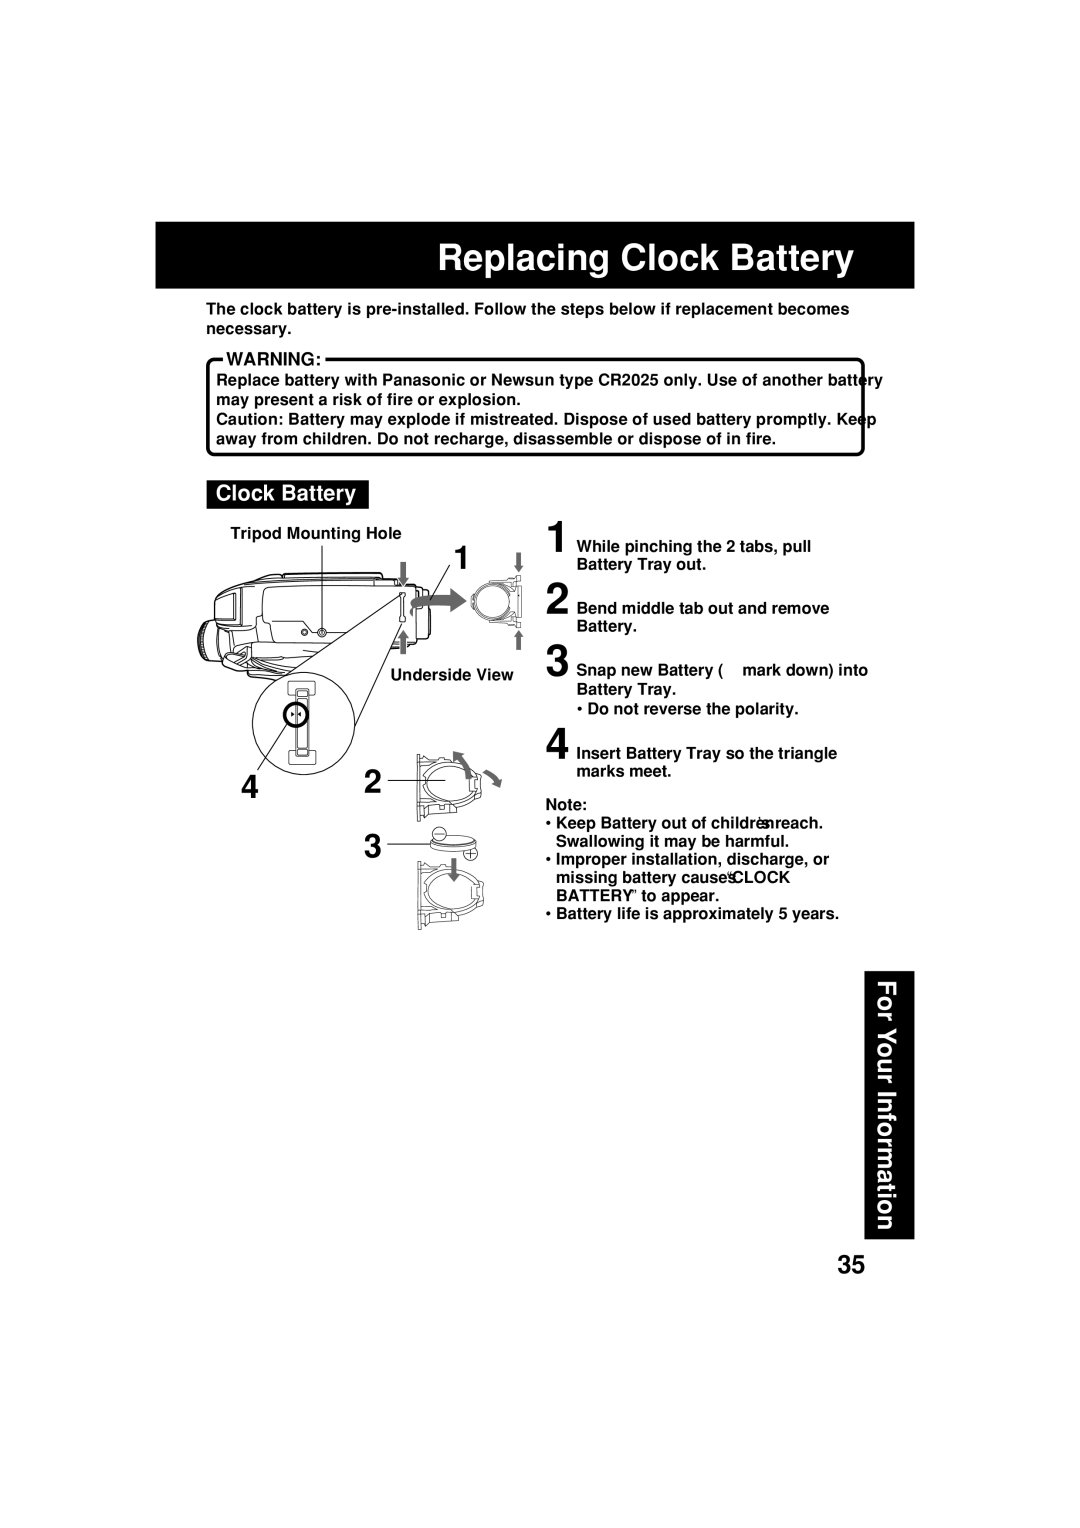 Panasonic VM-L153 operating instructions Replacing Clock Battery, Insert Battery Tray so the triangle marks meet 